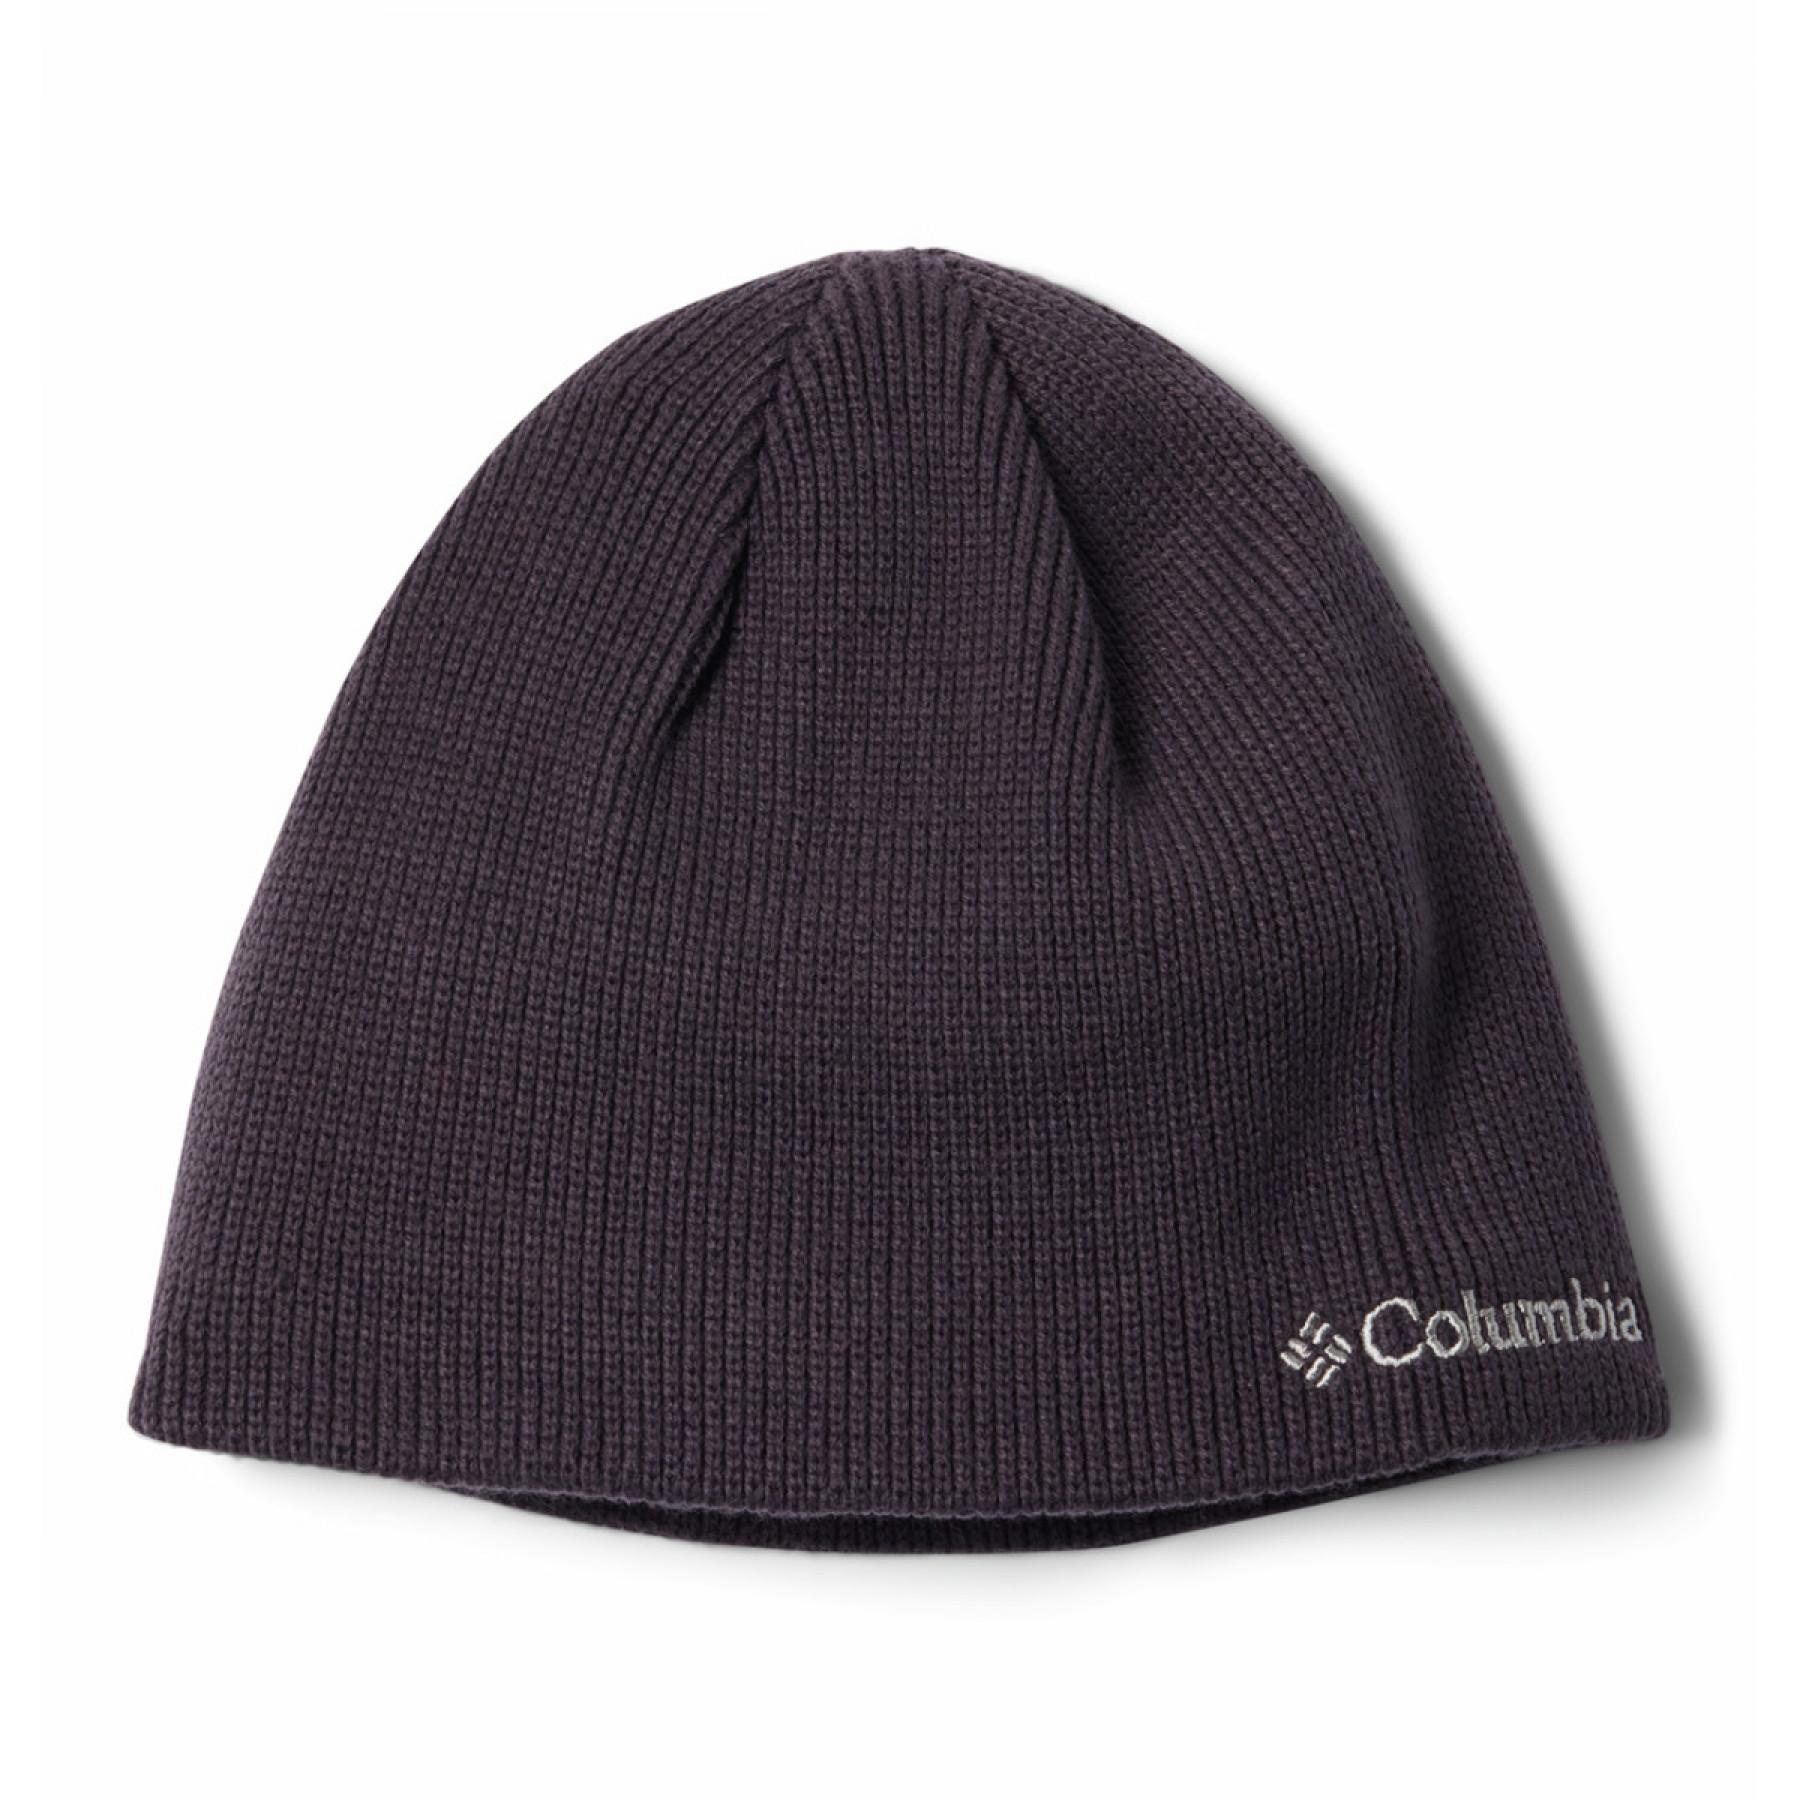 Cappello Columbia Bugaboo